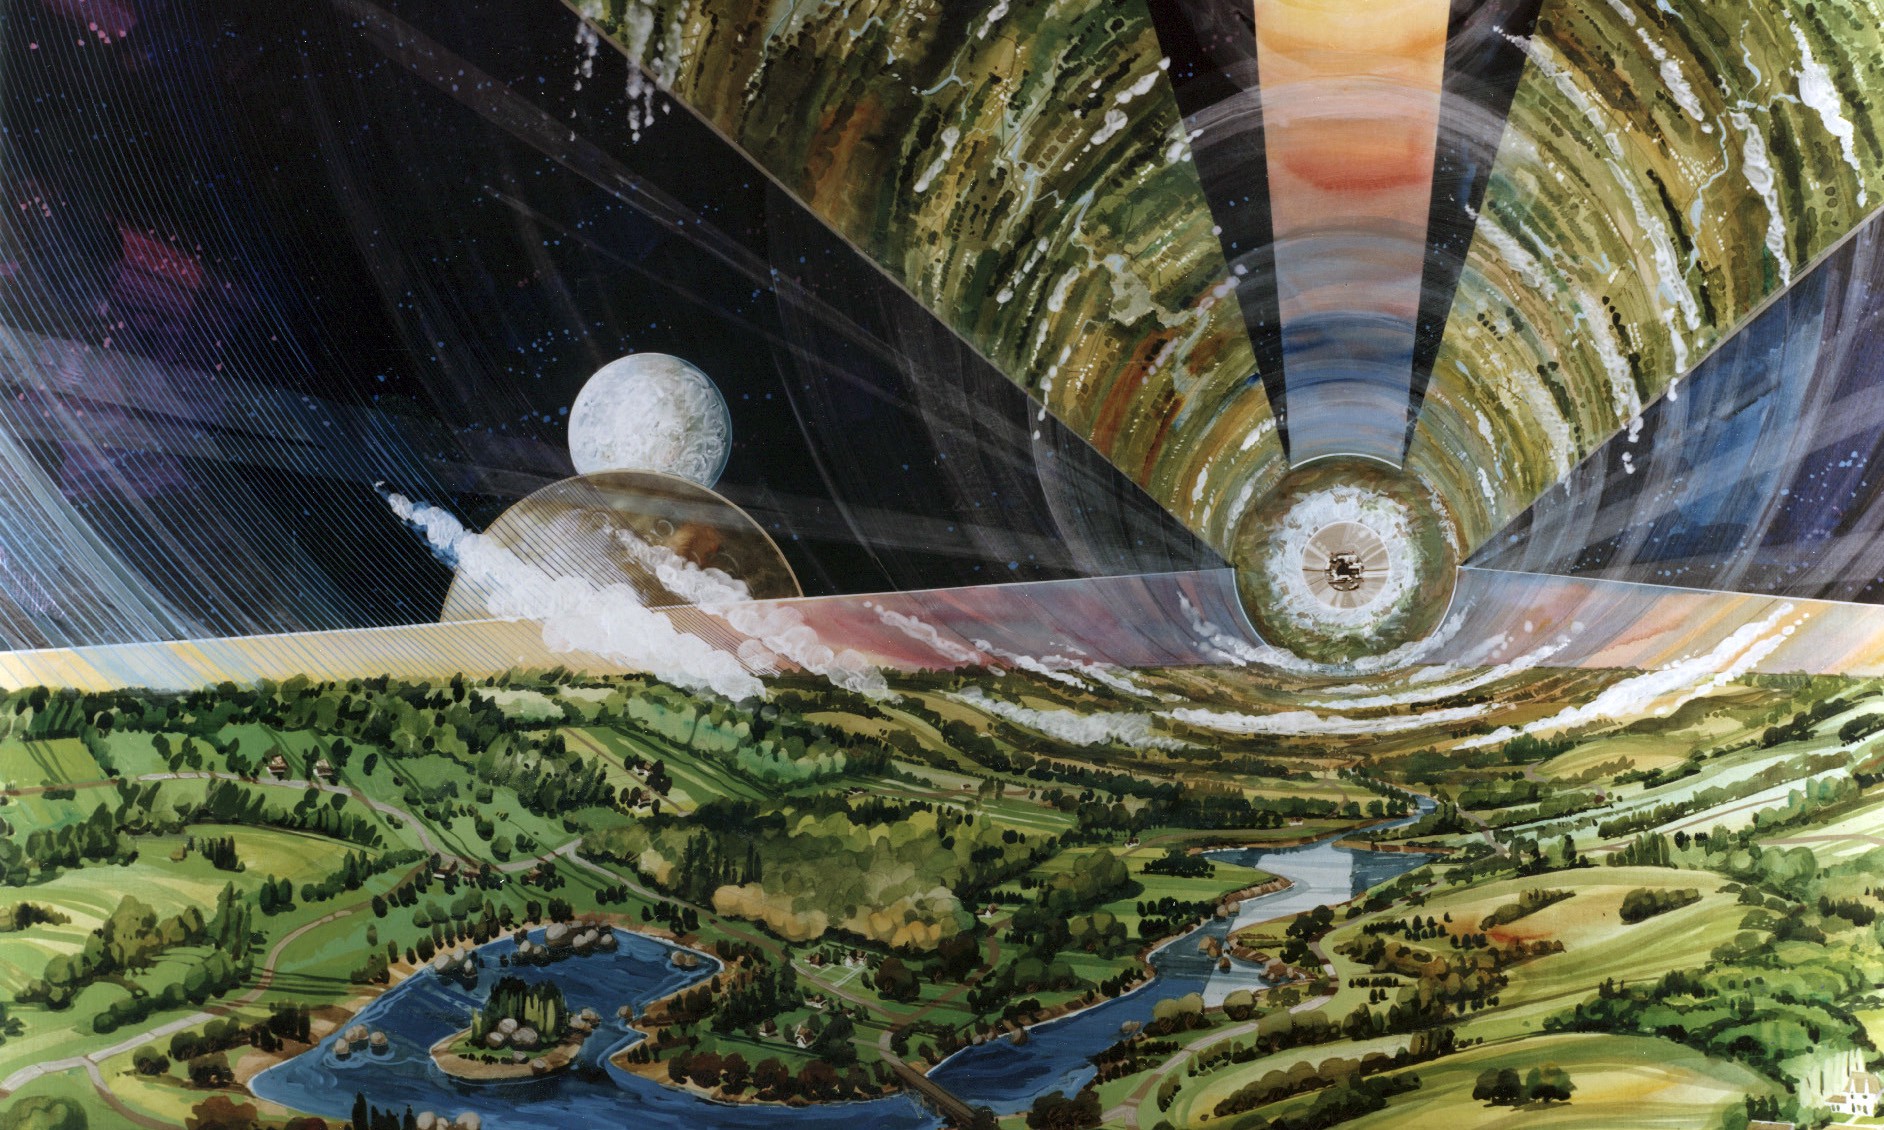 Illustration of a self-sustaining spaceship